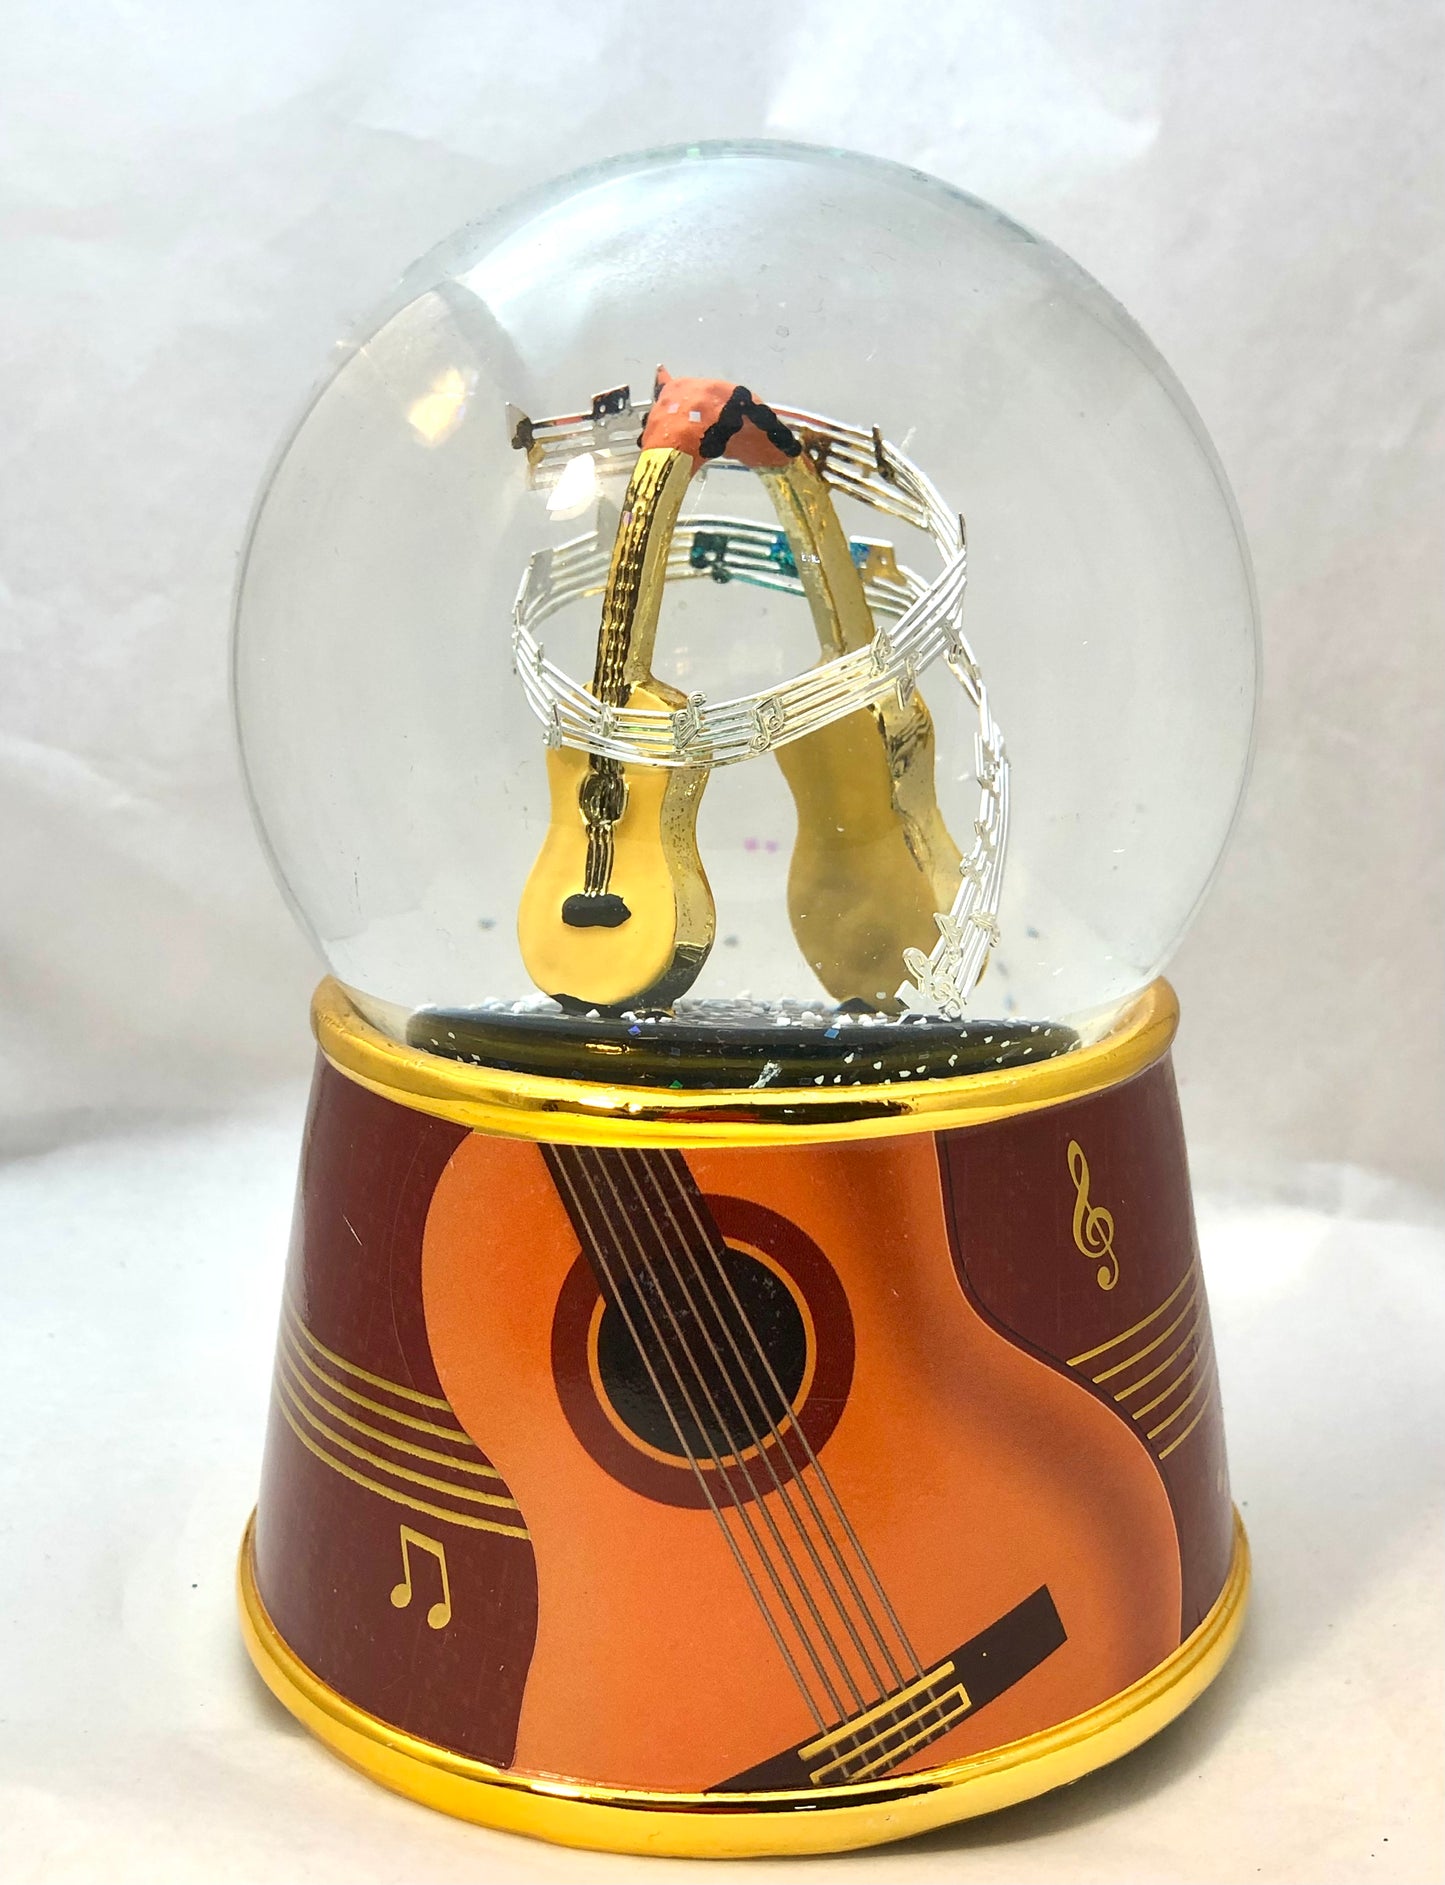 Snow globe with guitar